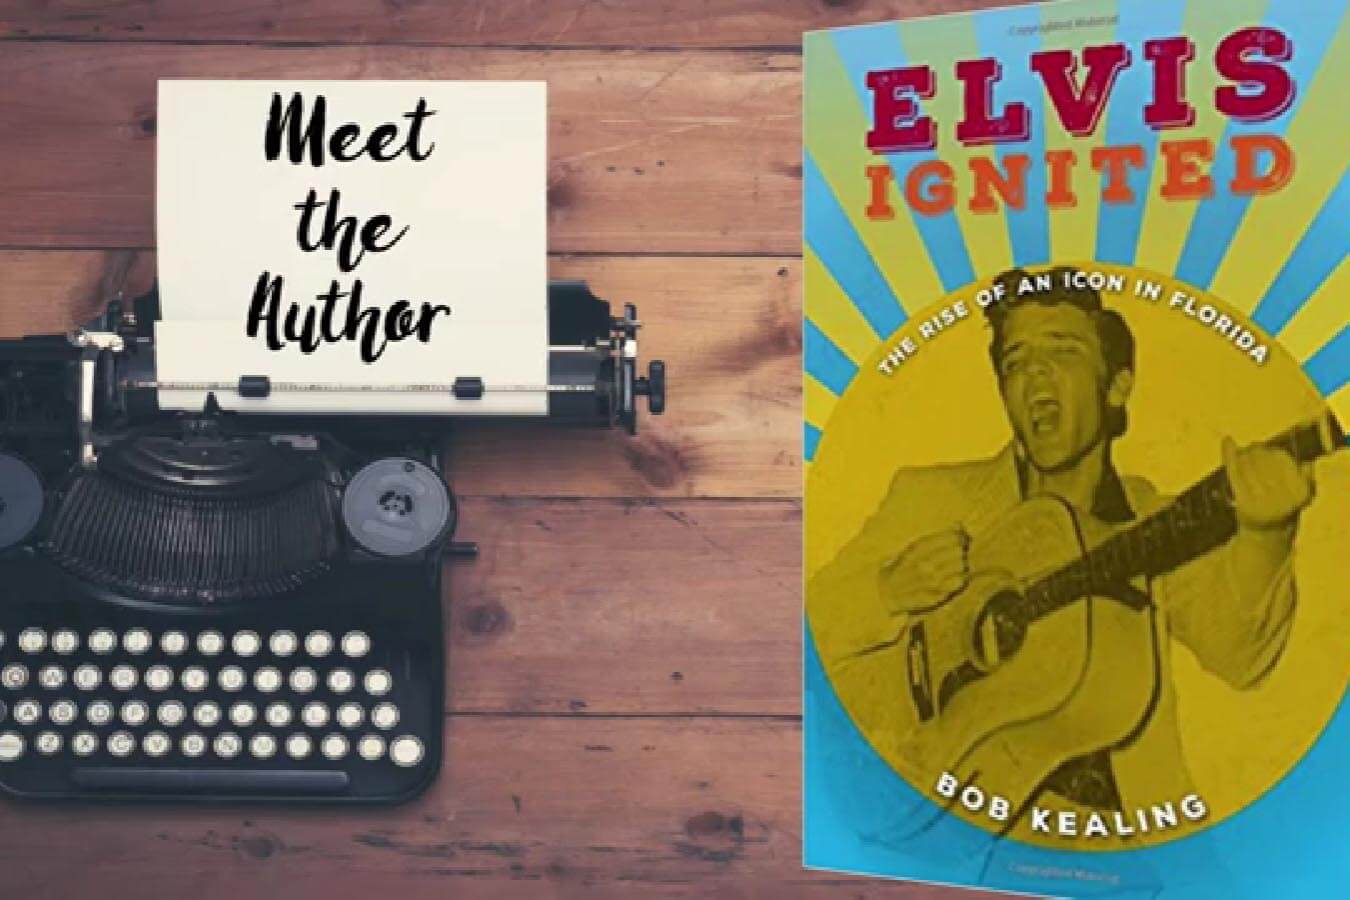 Meet the Author - Elvis Ignited